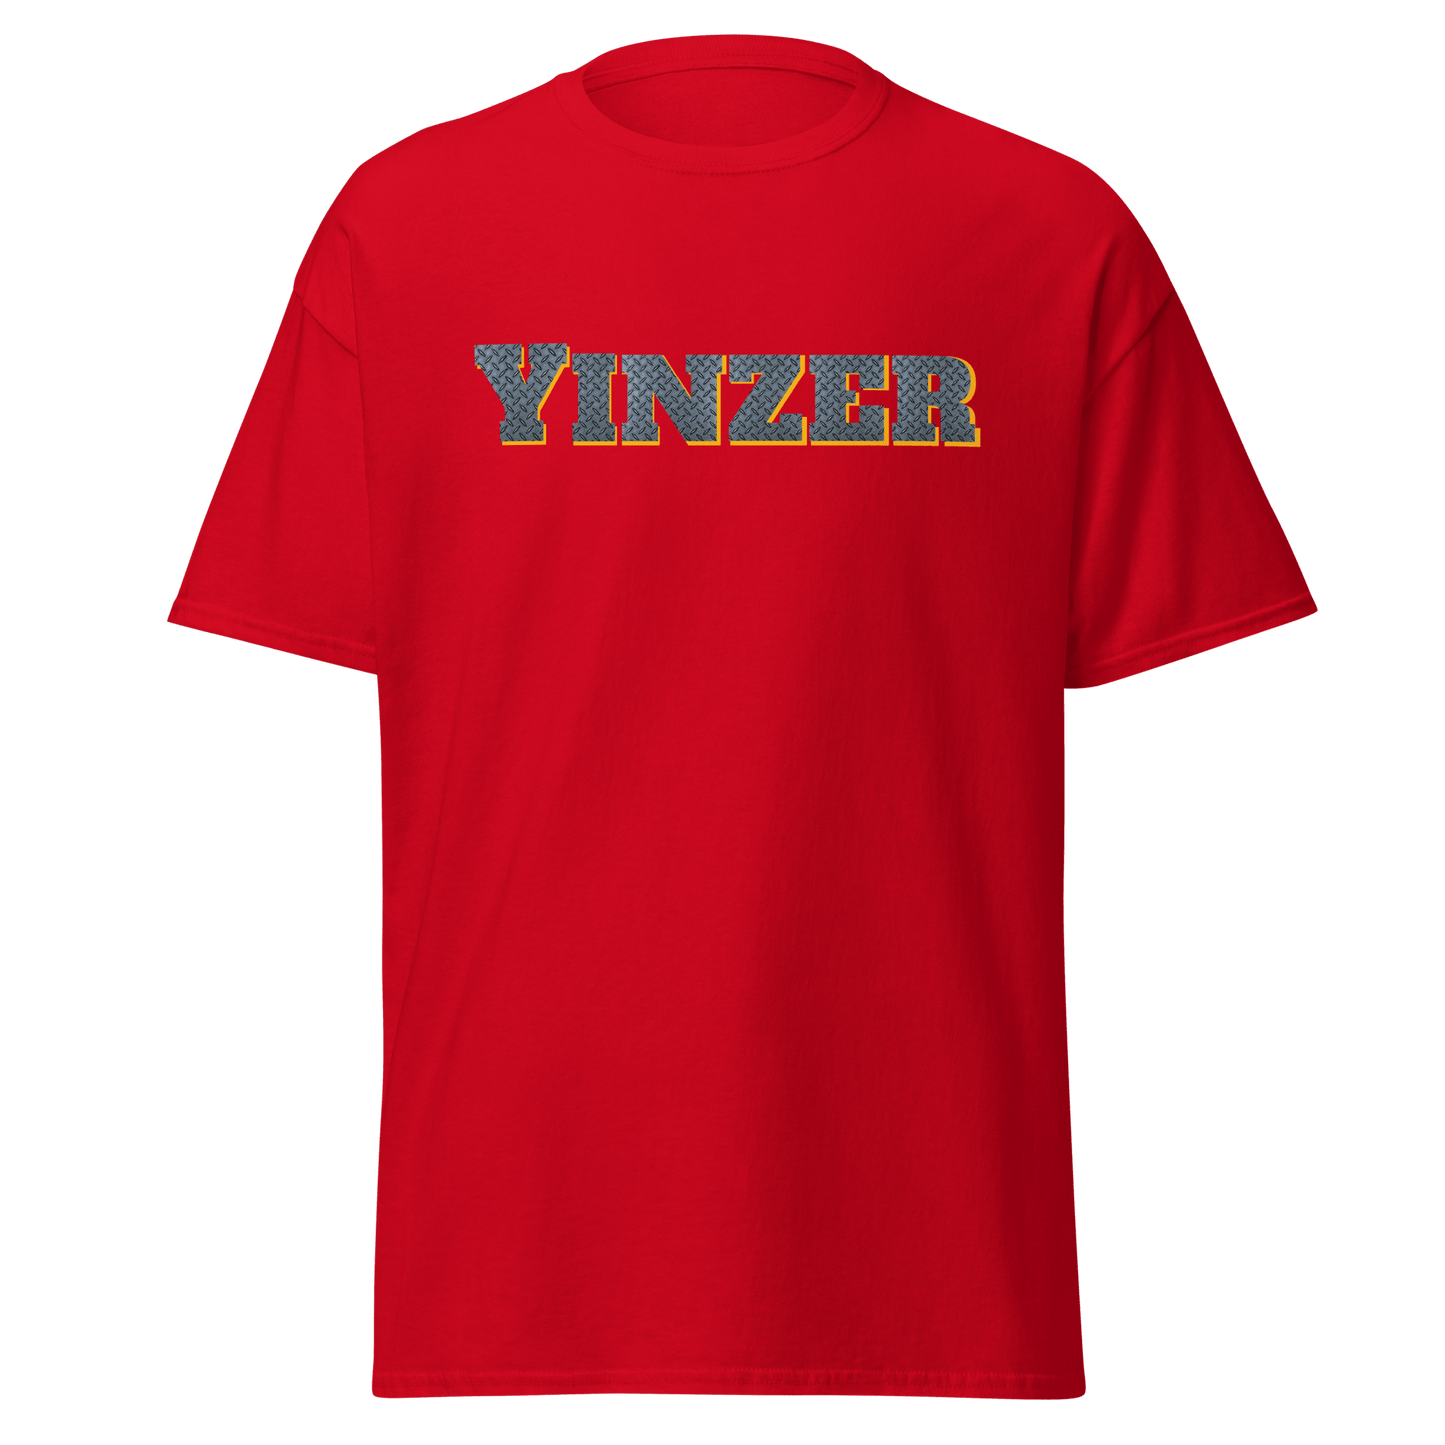 Steel Yinzer T-Shirt - Burgh Proud Yinzergear Red S 